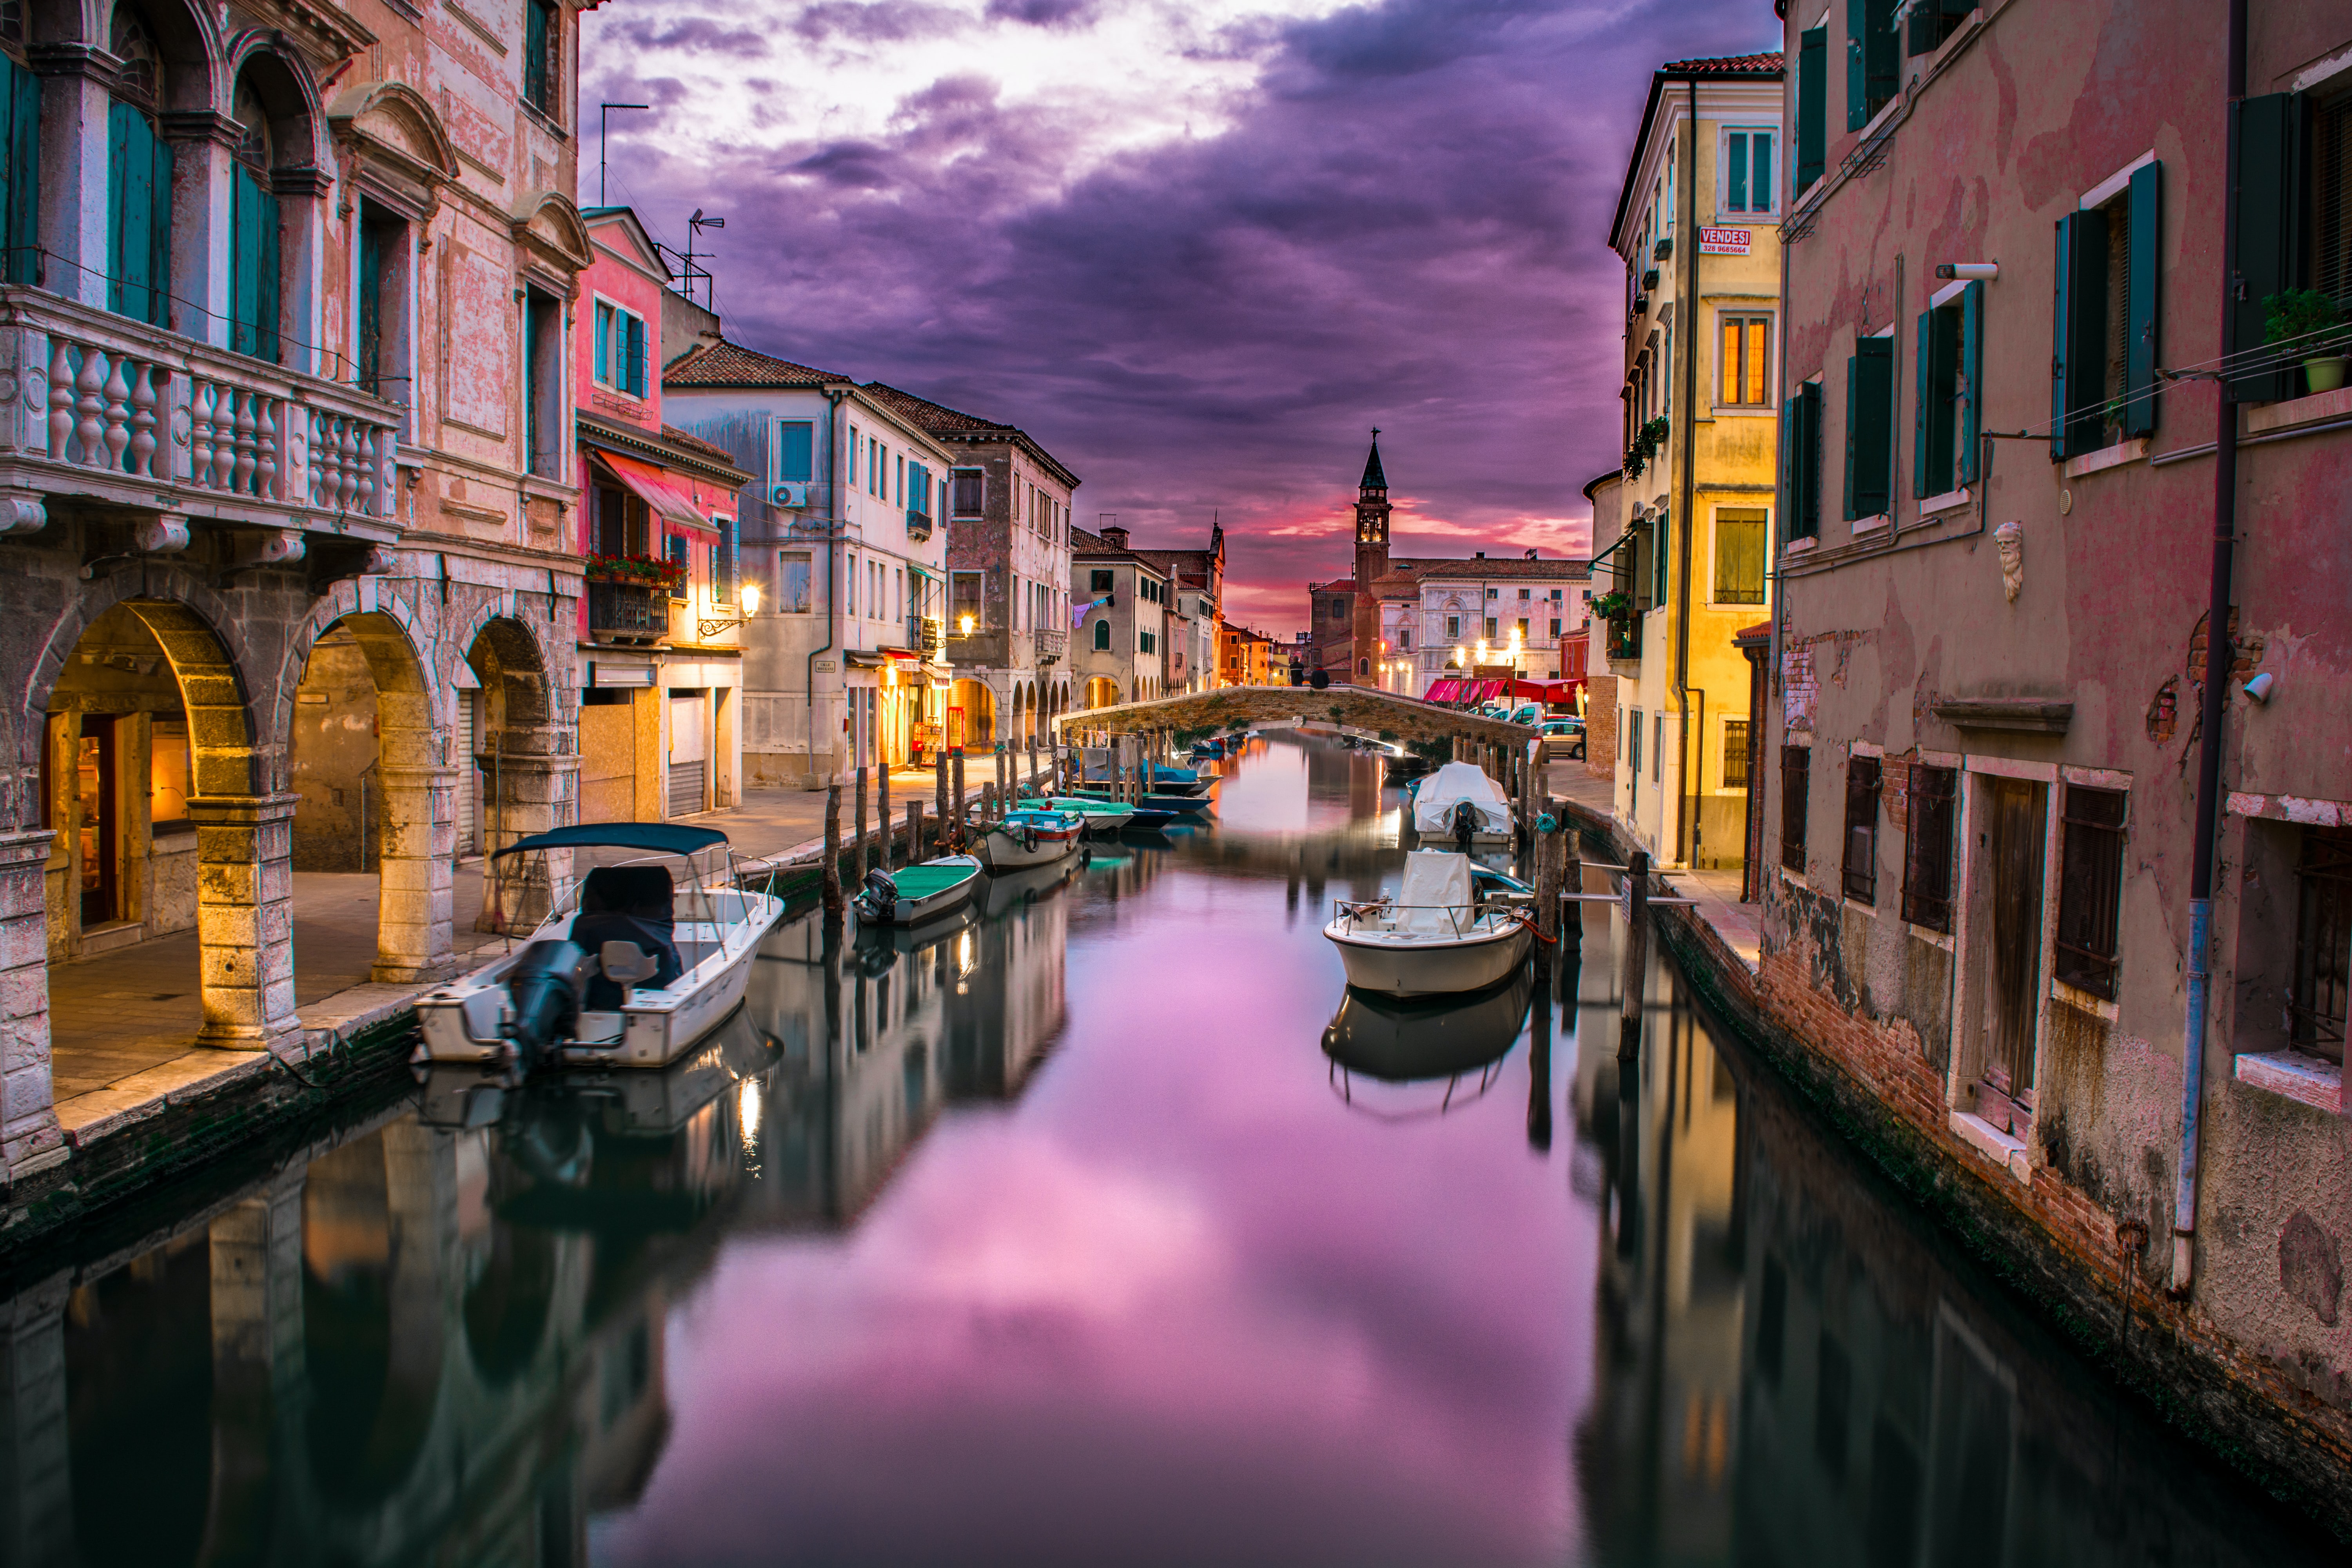 Waterways in Venice